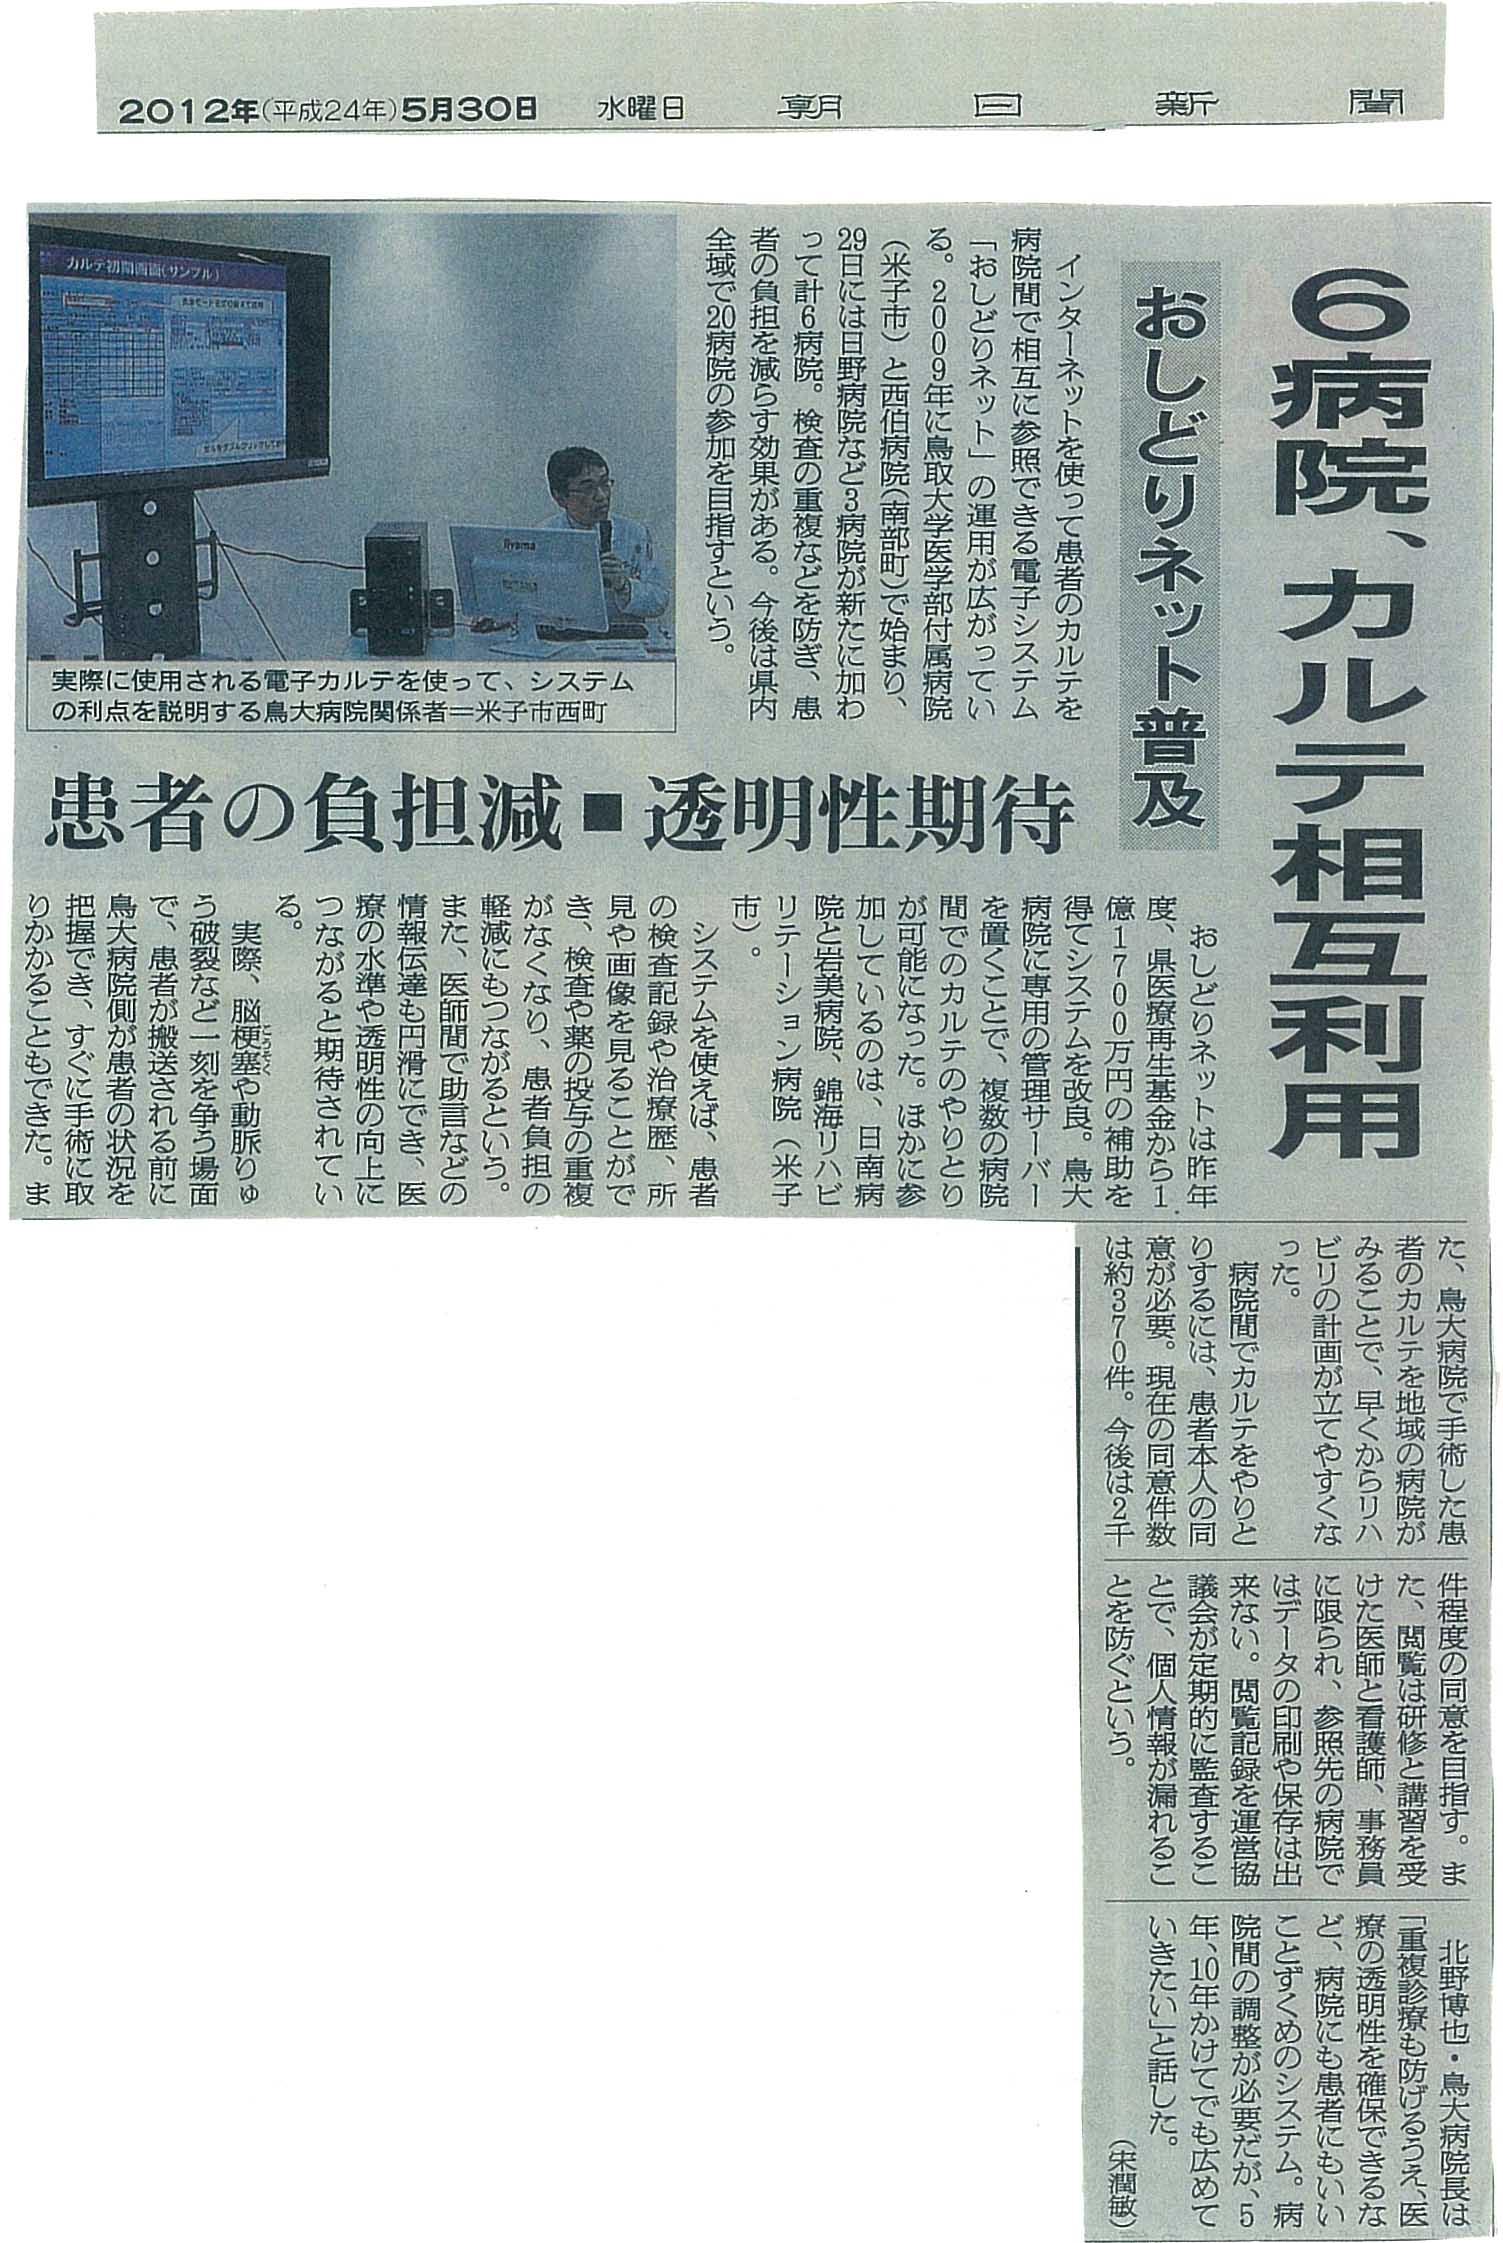 2012年5月30日(朝日新聞)